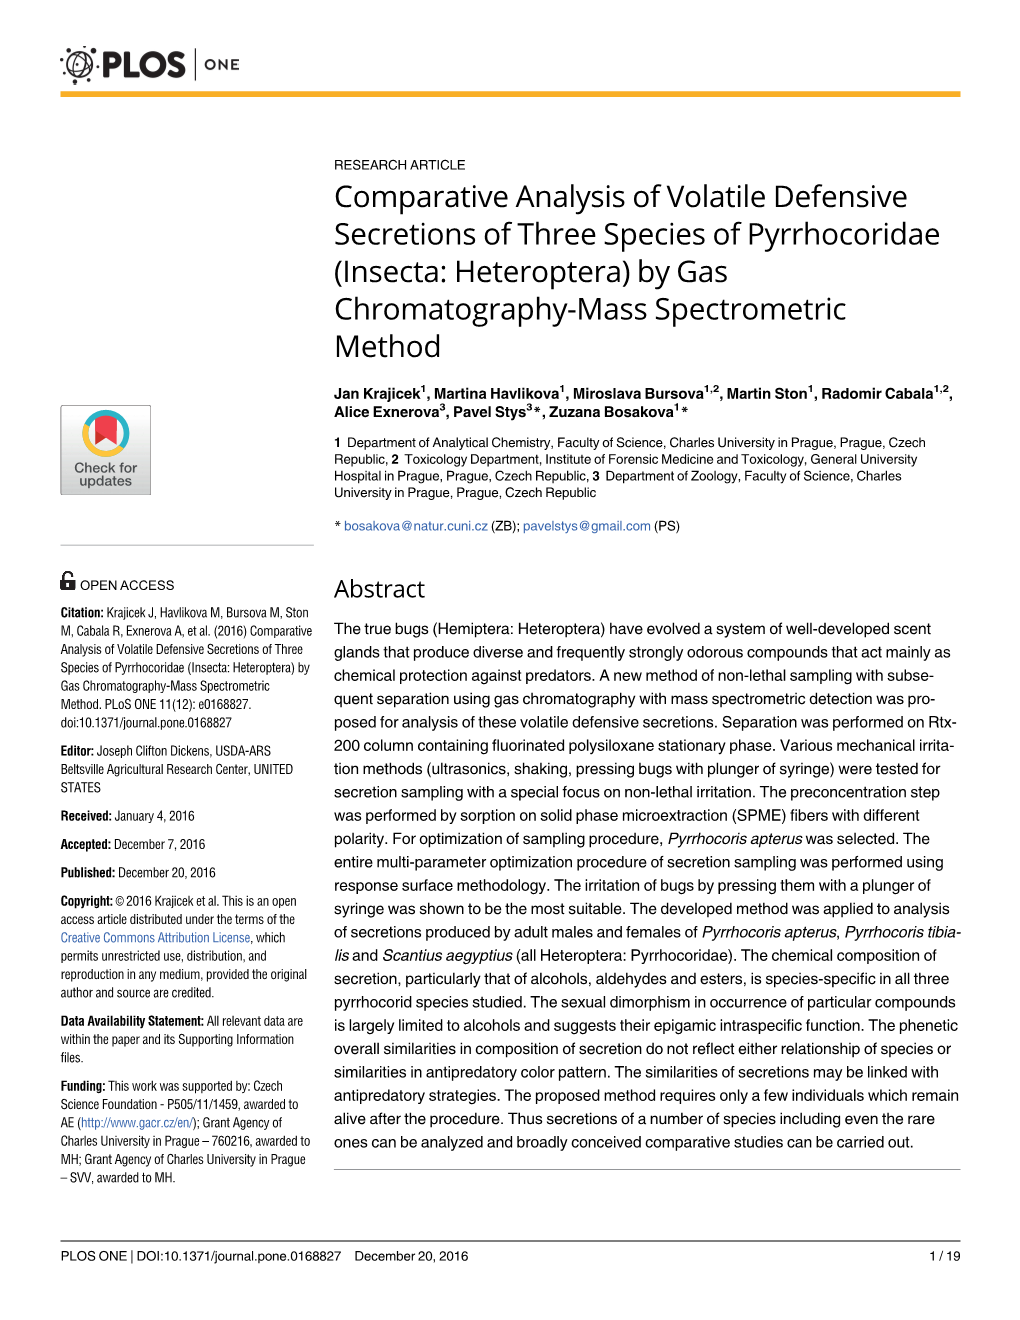 Comparative Analysis of Volatile Defensive Secretions of Three Species of Pyrrhocoridae (Insecta: Heteroptera) by Gas Chromatography-Mass Spectrometric Method